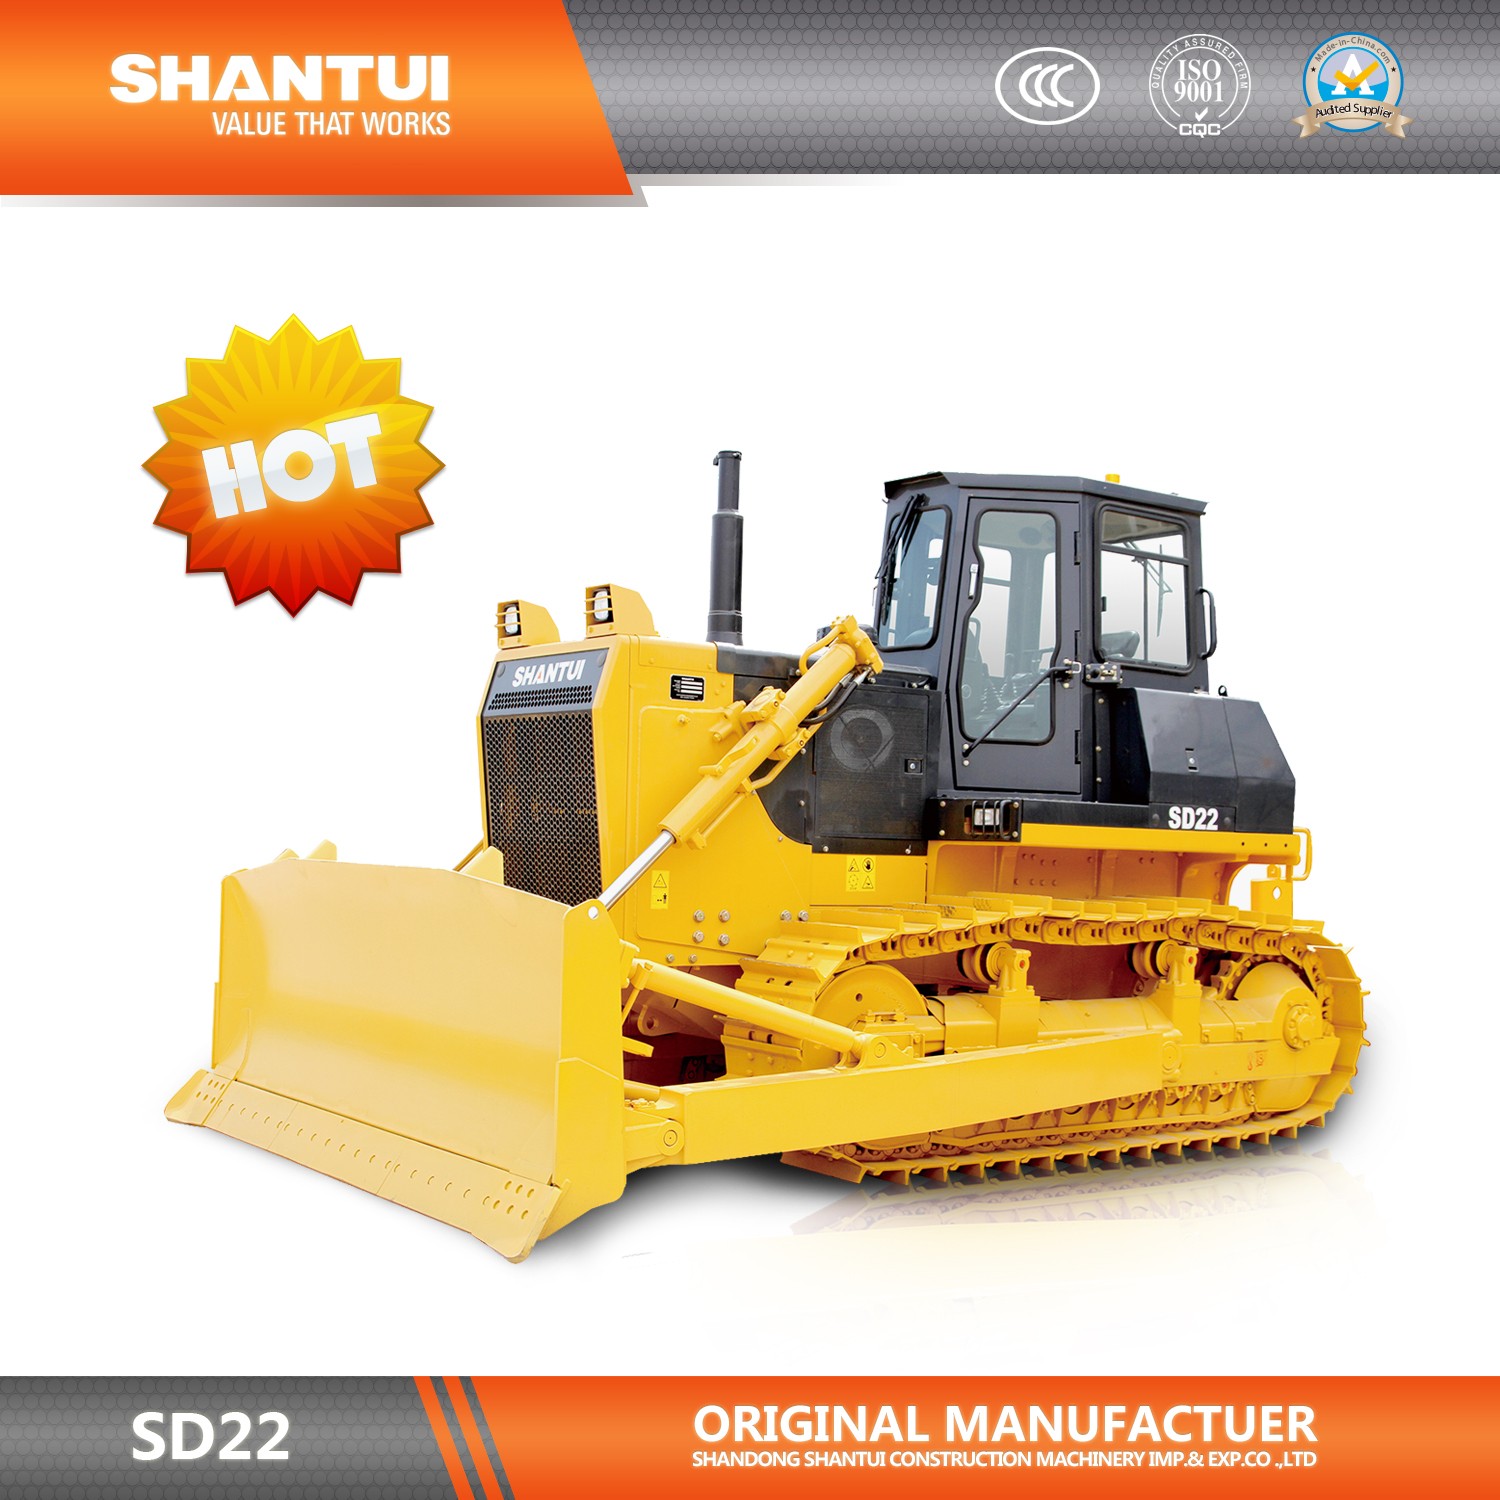 Shantui 220 Horsepower Crawler Bulldozer SD22